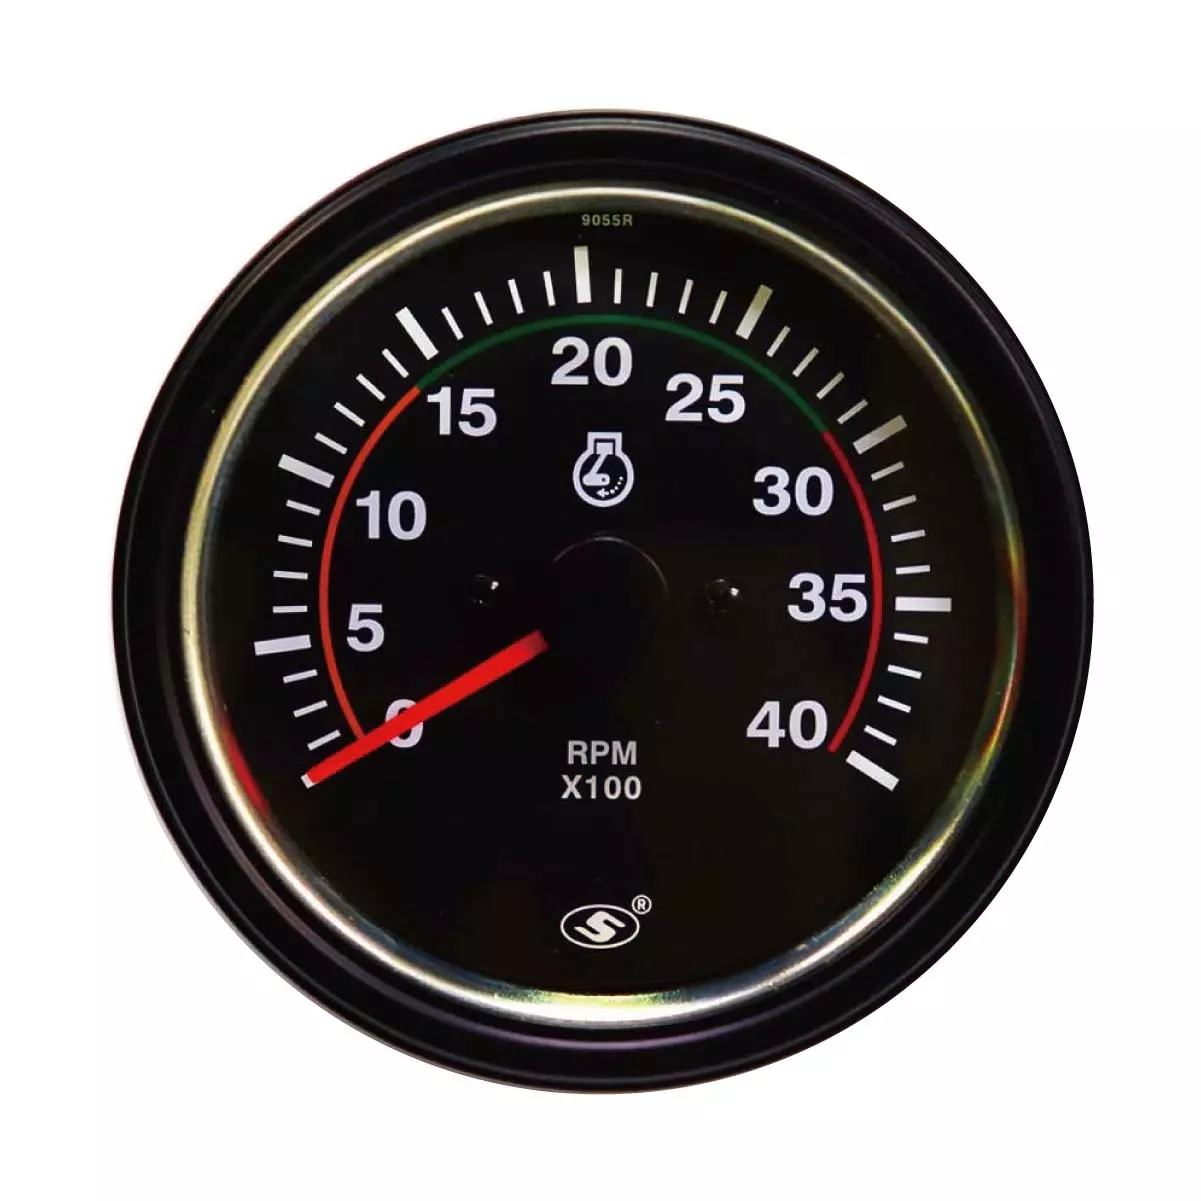 MOTOR METER RACING 3-3/4 95mm Tachometer for Gasoline 11,000 RPM Built-in Shift Light on Dashboard